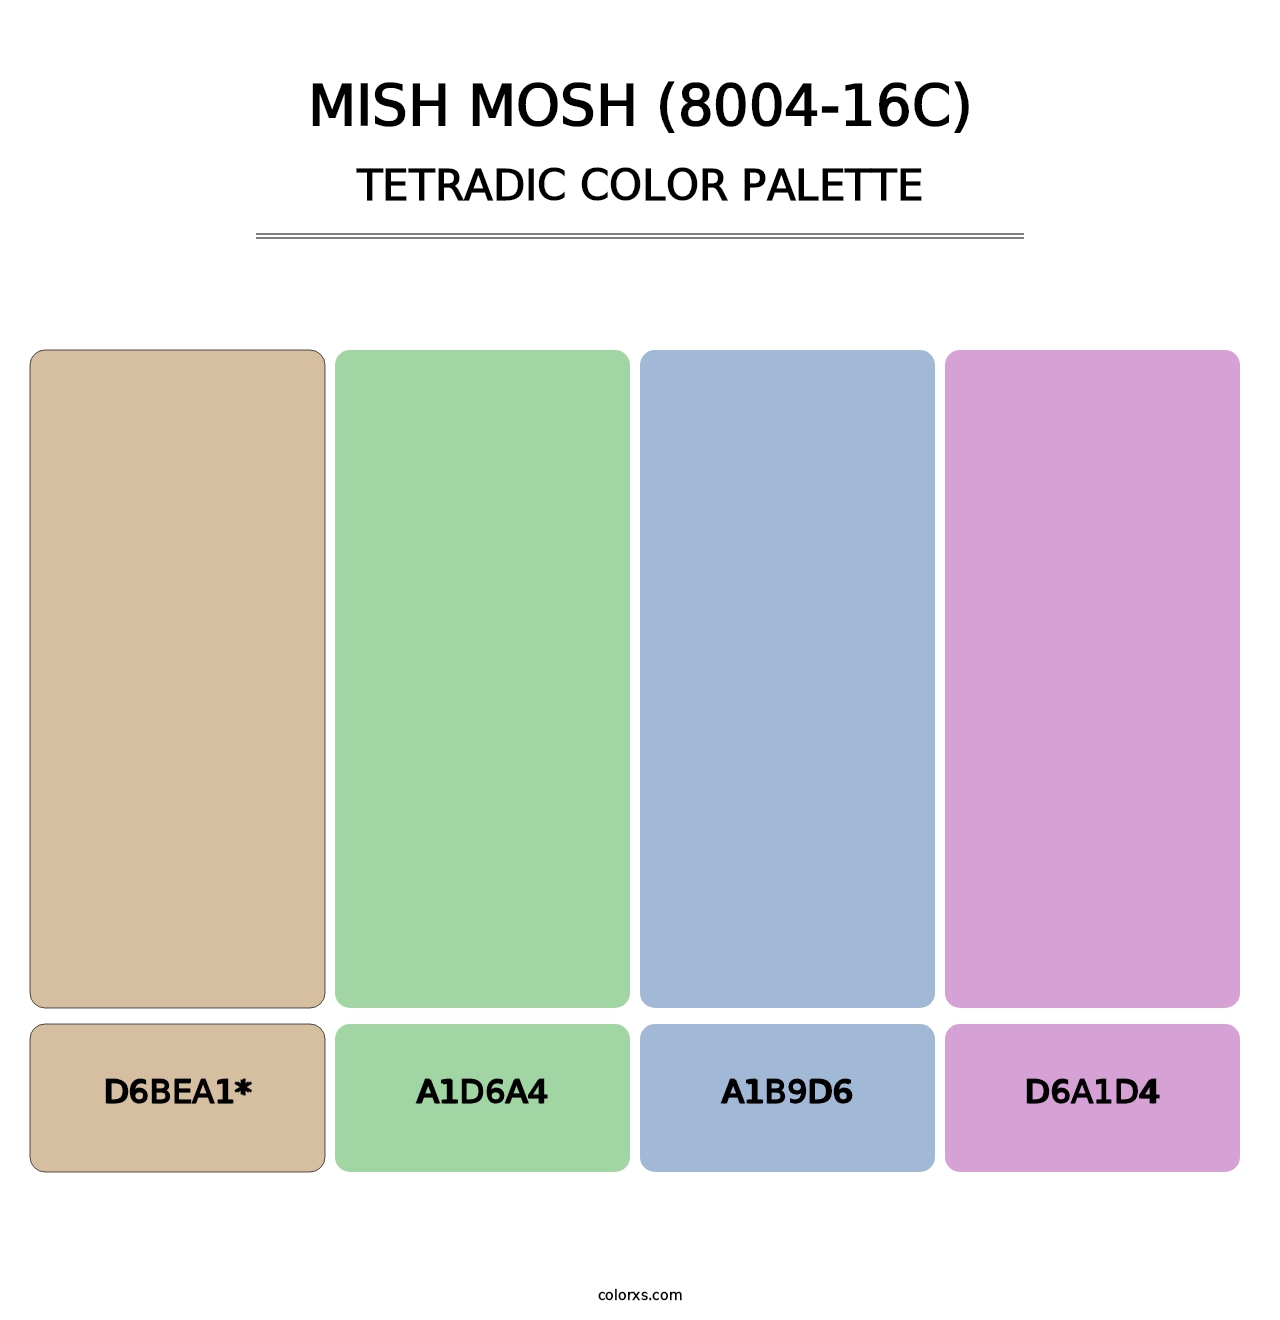 Mish Mosh (8004-16C) - Tetradic Color Palette